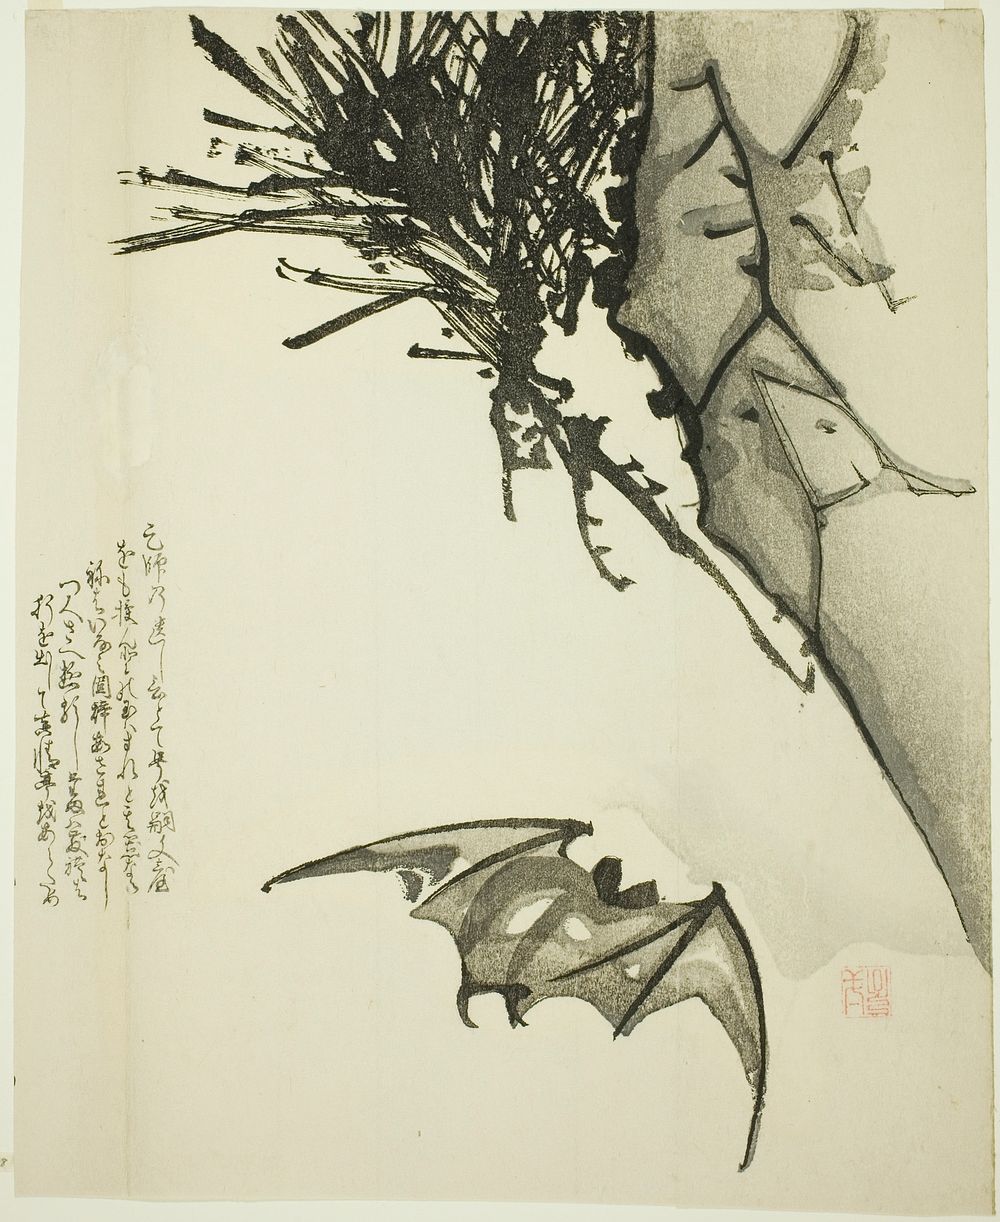 A Bat Flying near a Pine Tree by Issho